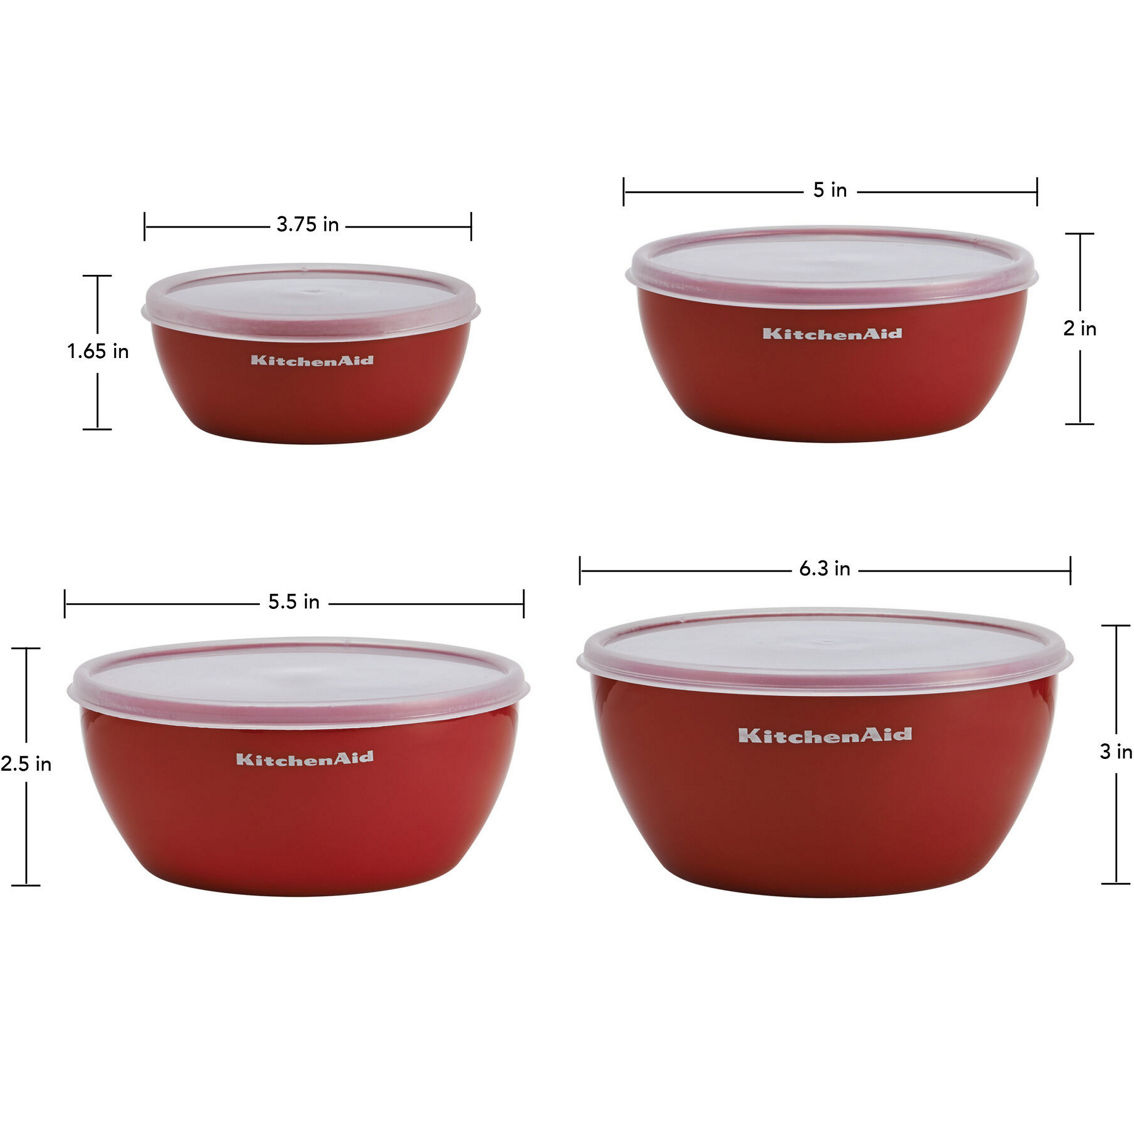 KitchenAid Classic Prep Bowls 4 pc. Set with Lids - Image 3 of 4